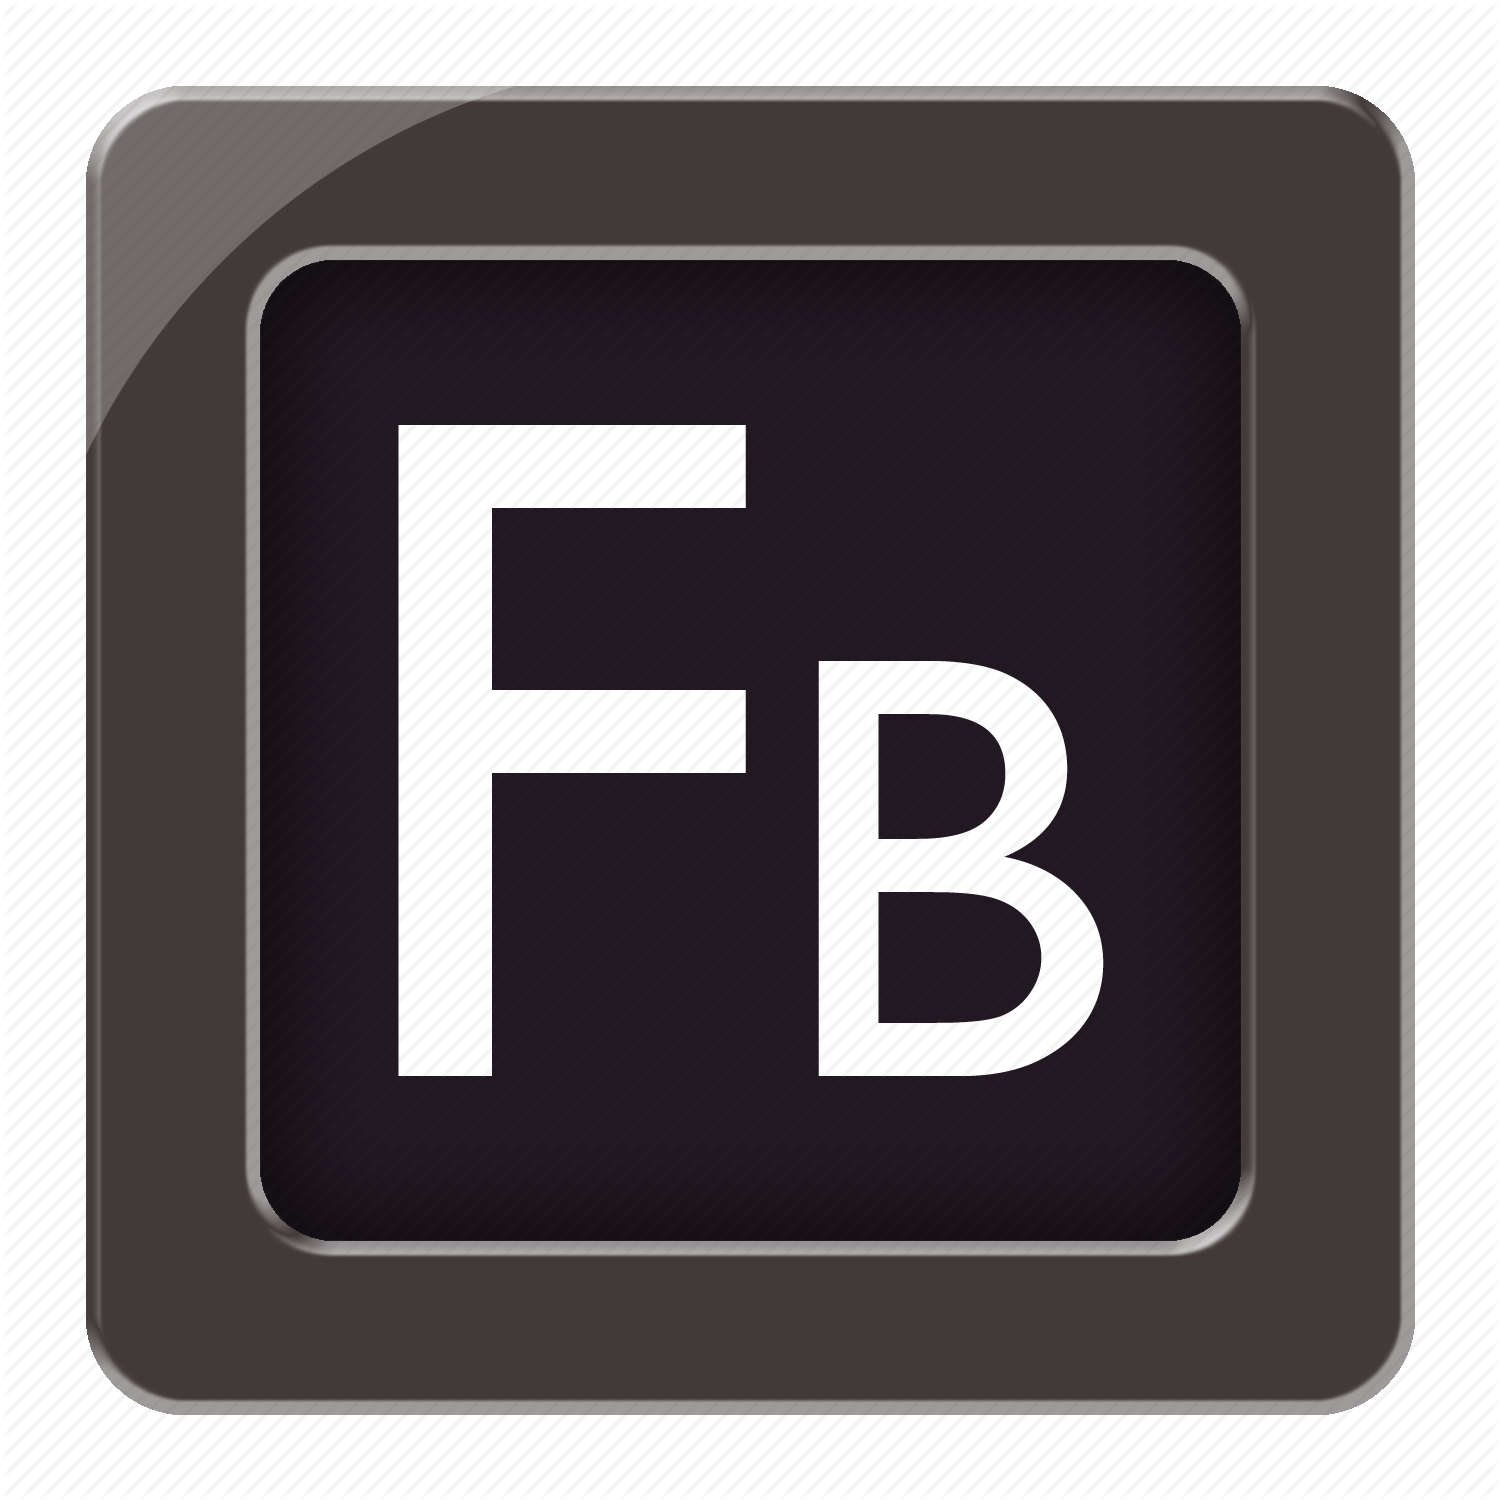 Adobe Cs4 For Mac Torrent